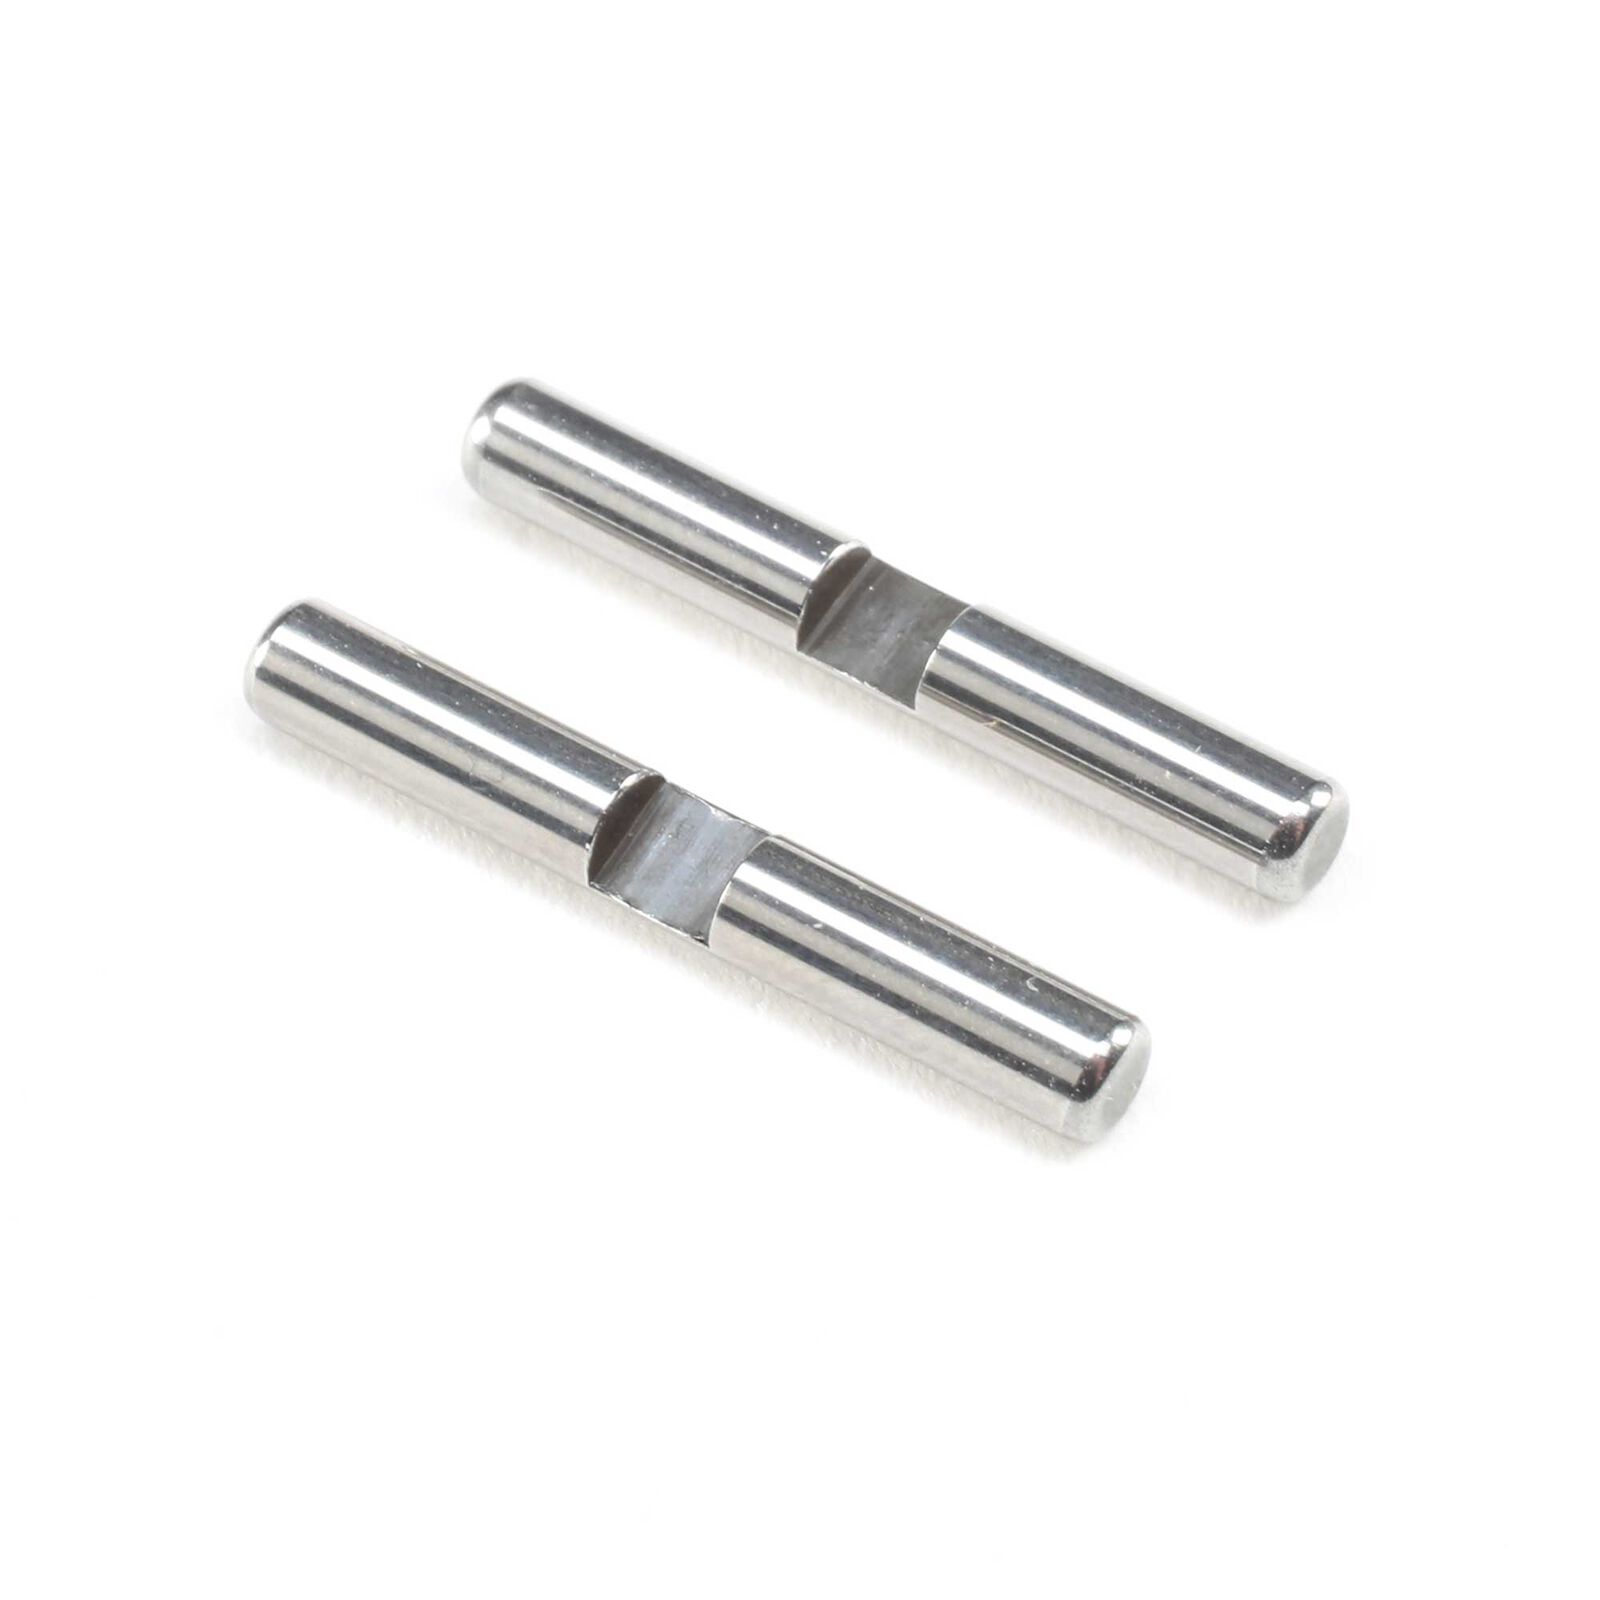 Steel Cross Pins (2): 22 5.0 G2 Gear Diff